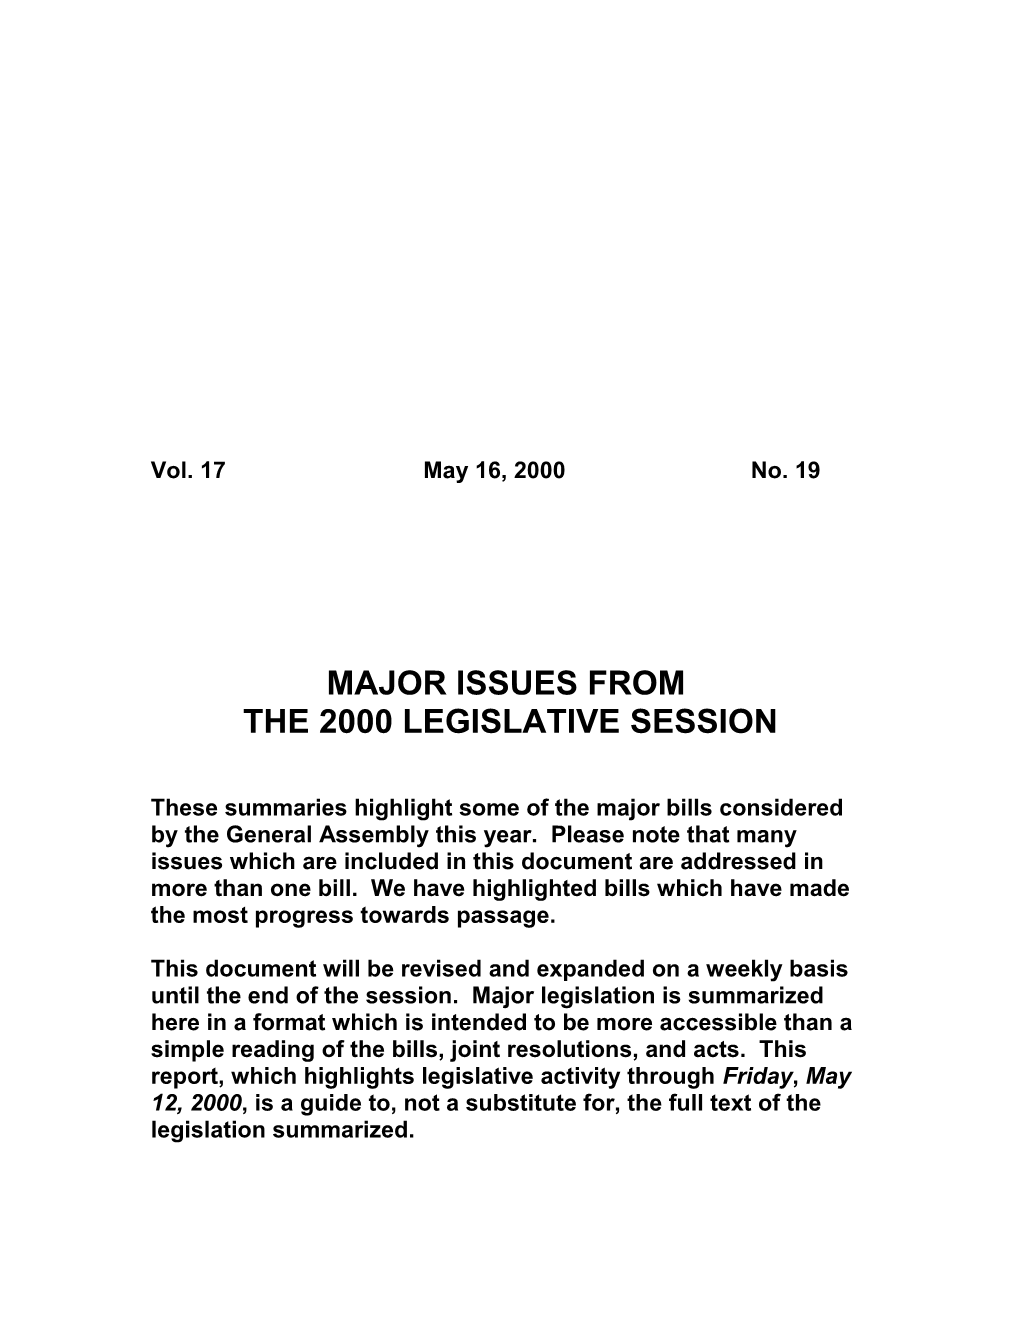 Legislative Update - Vol. 17 No. 19 May 16, 2000 - South Carolina Legislature Online